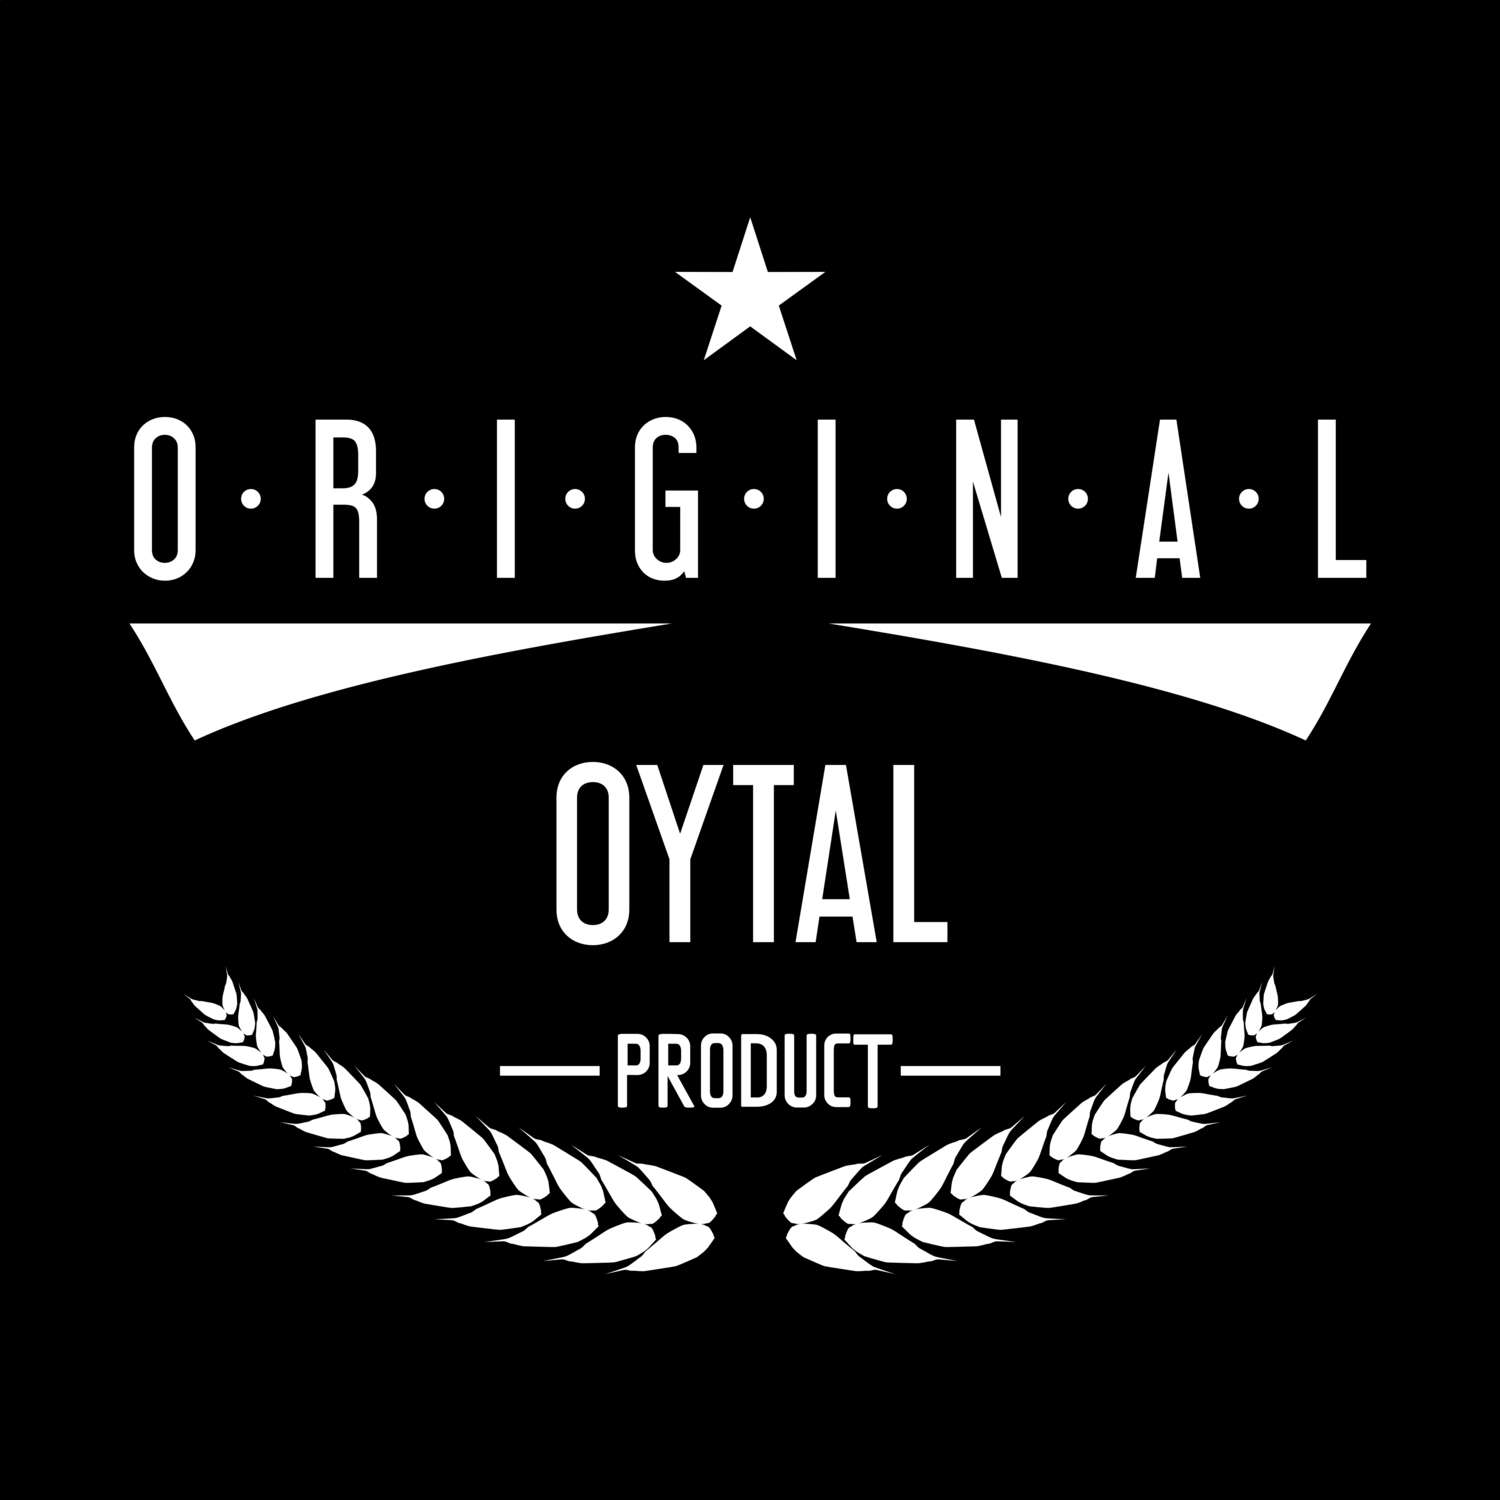 Oytal T-Shirt »Original Product«